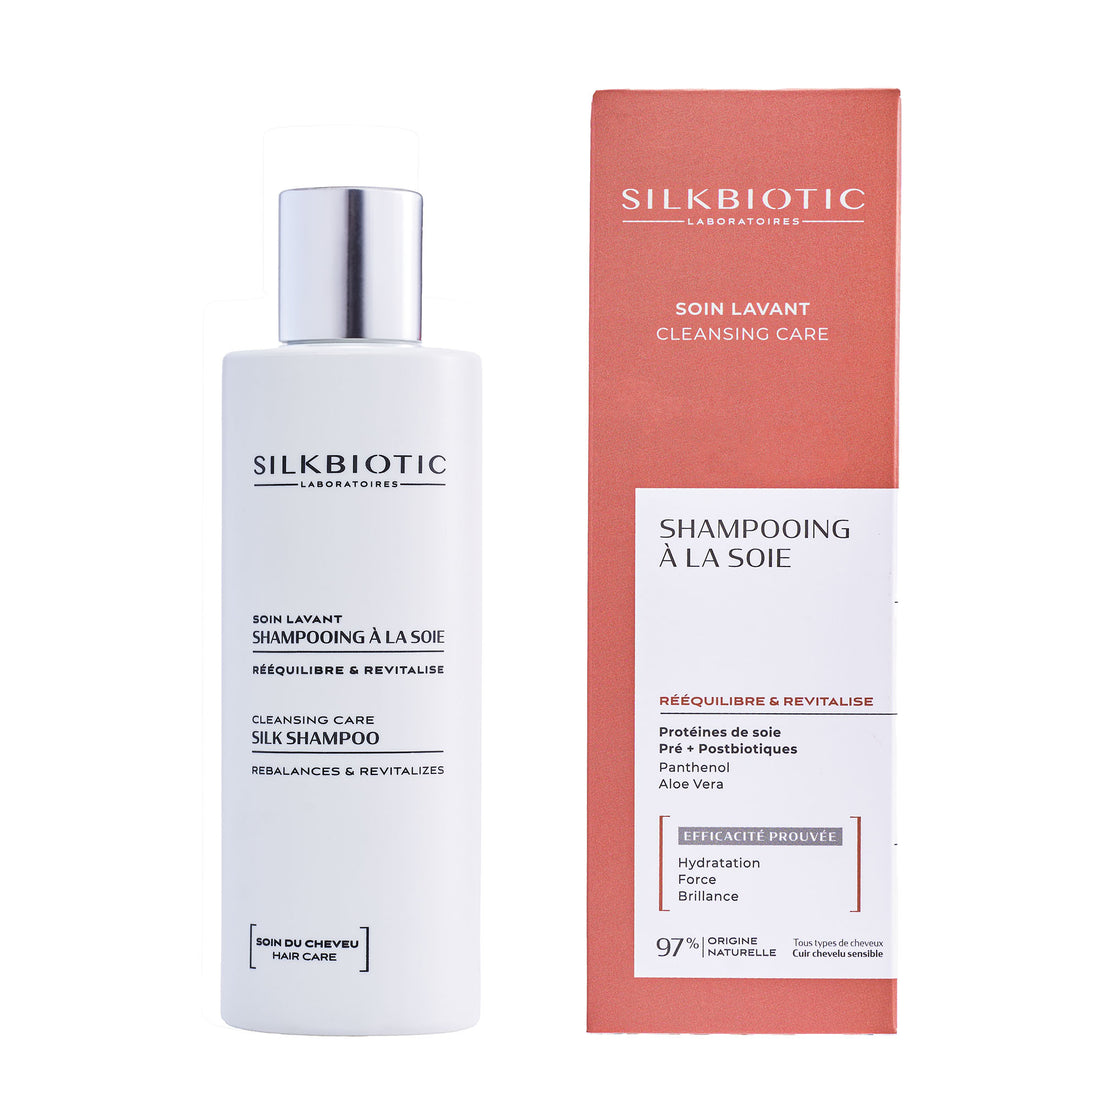 SILKBIOTIC Silk shampoo - Cleansing care - 200ml